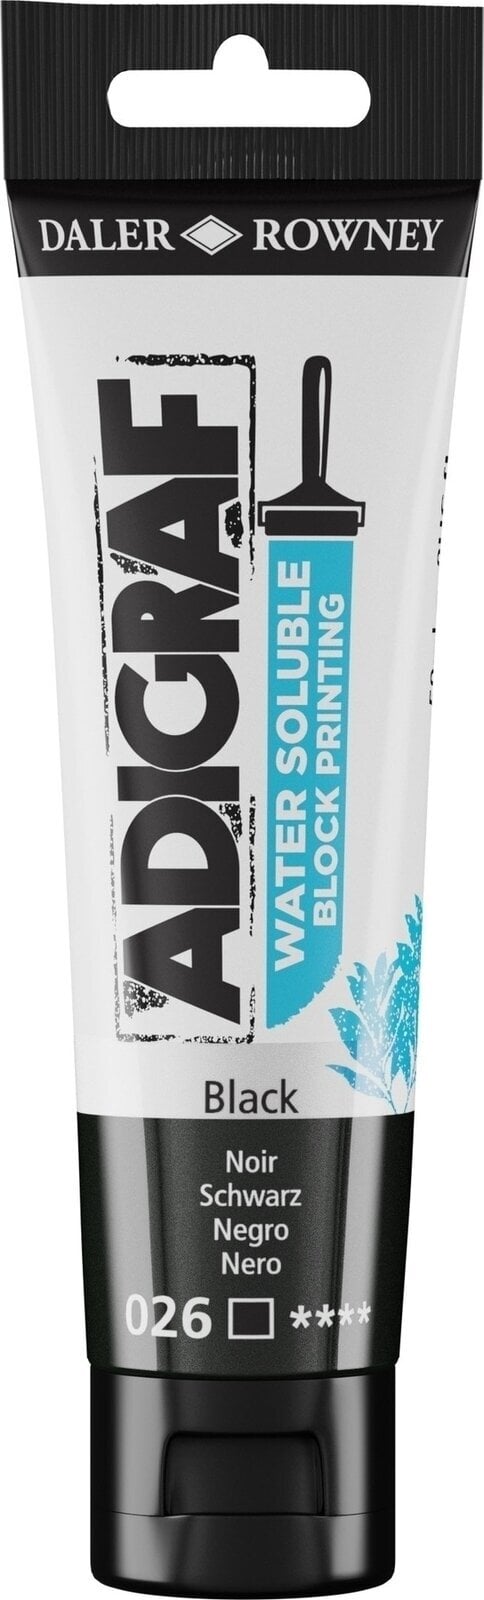 Tinta para linogravura Daler Rowney Adigraf Block Printing Water Soluble Colour Tinta para linogravura Black 59 ml